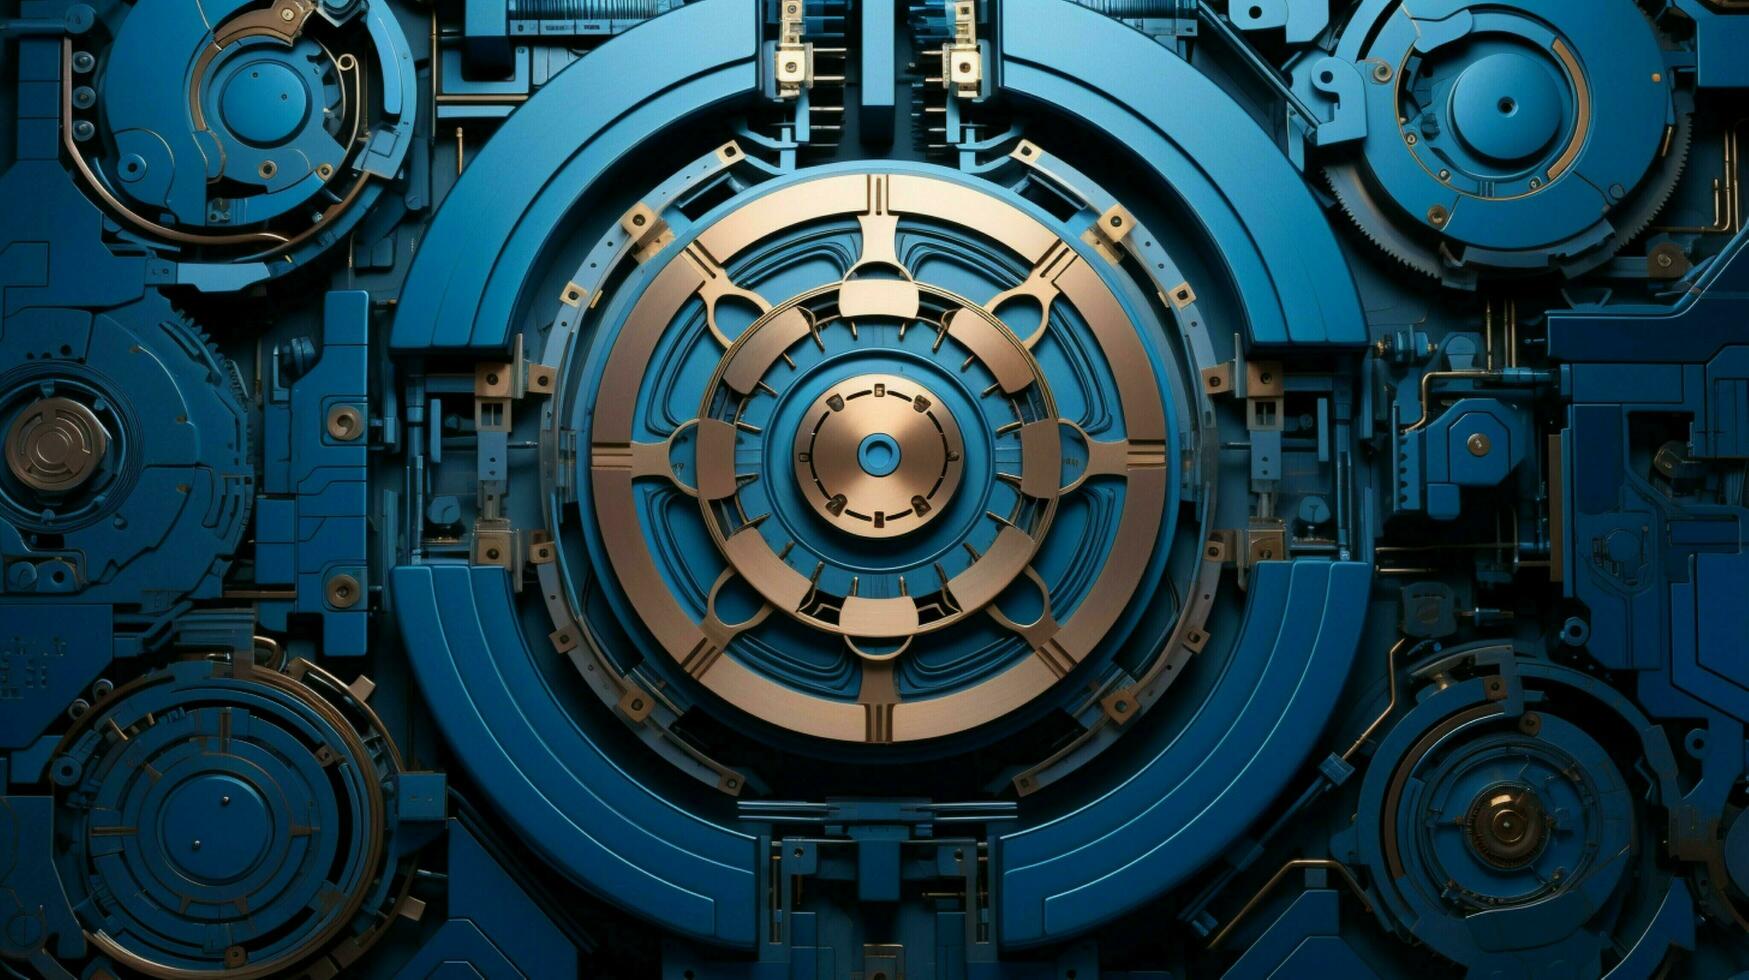 metallic machinery in blue circle high angle view photo